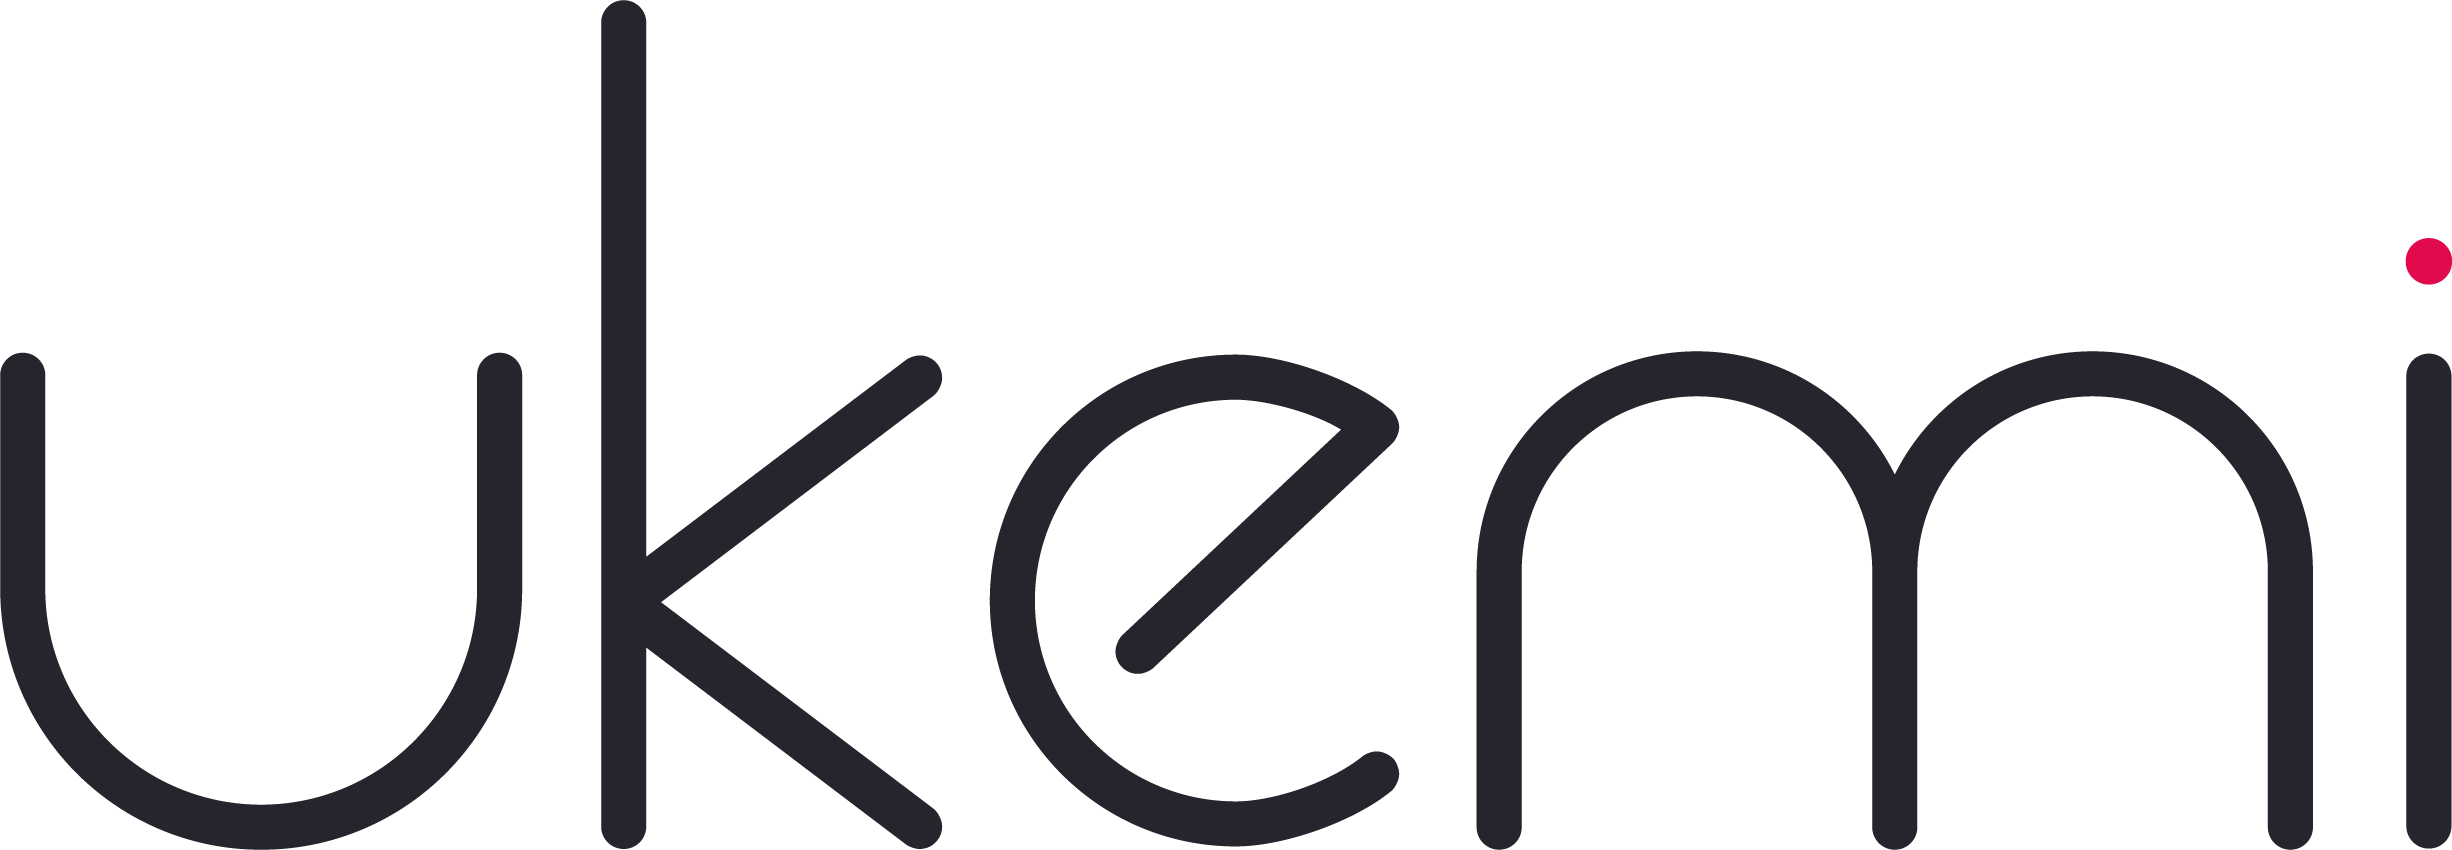 Ukemi Project text logo